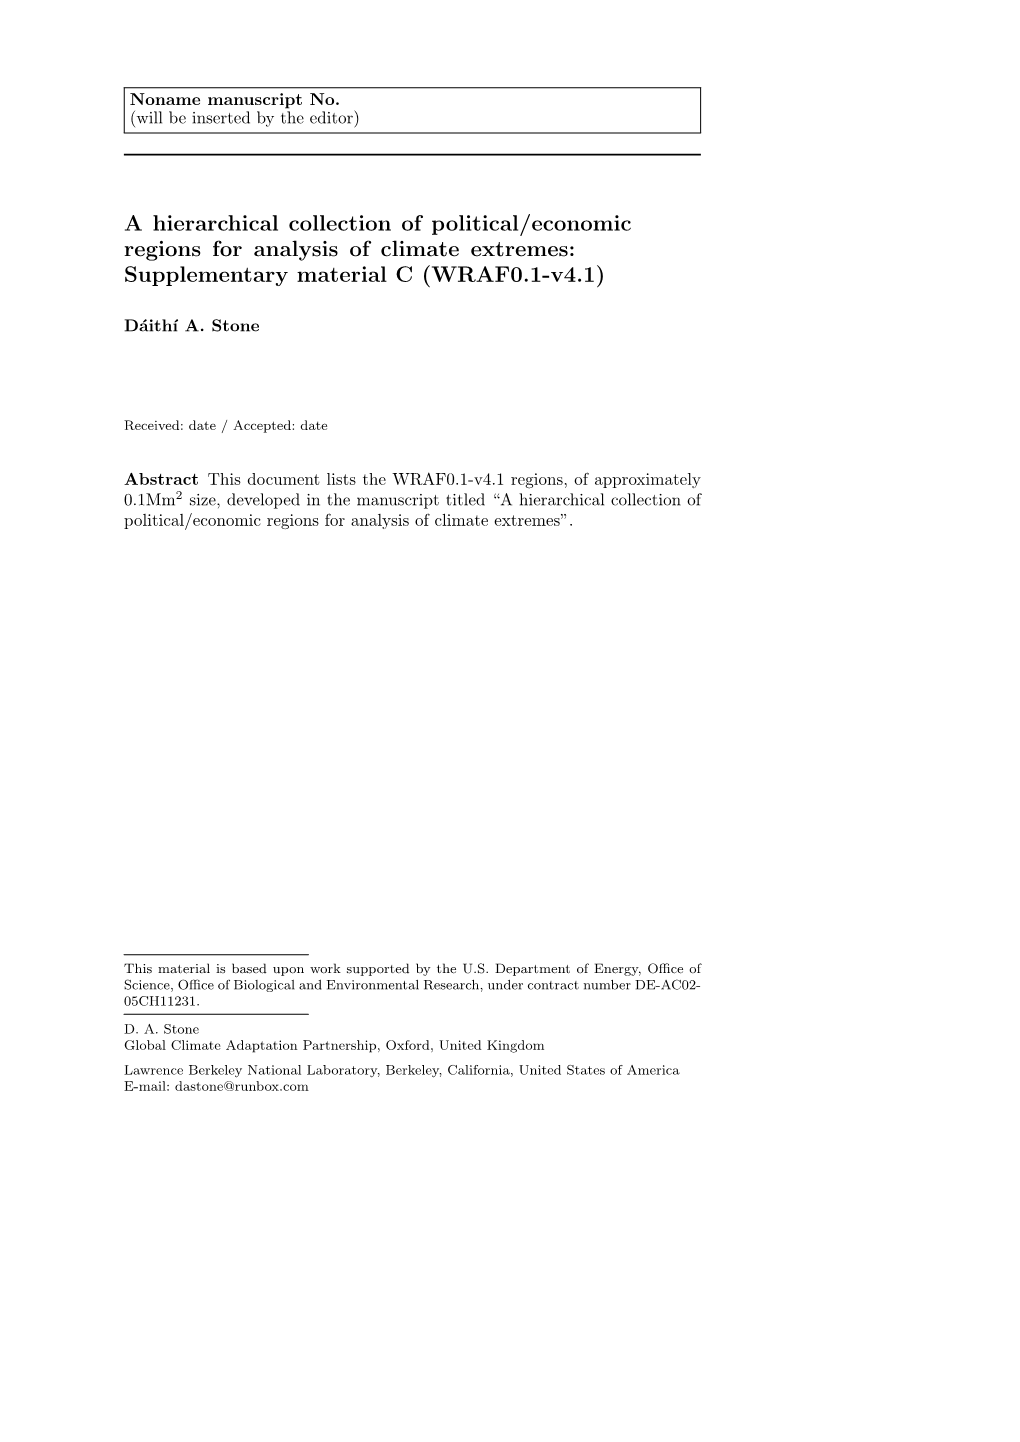 Supplementary Material C (WRAF0.1-V4.1)